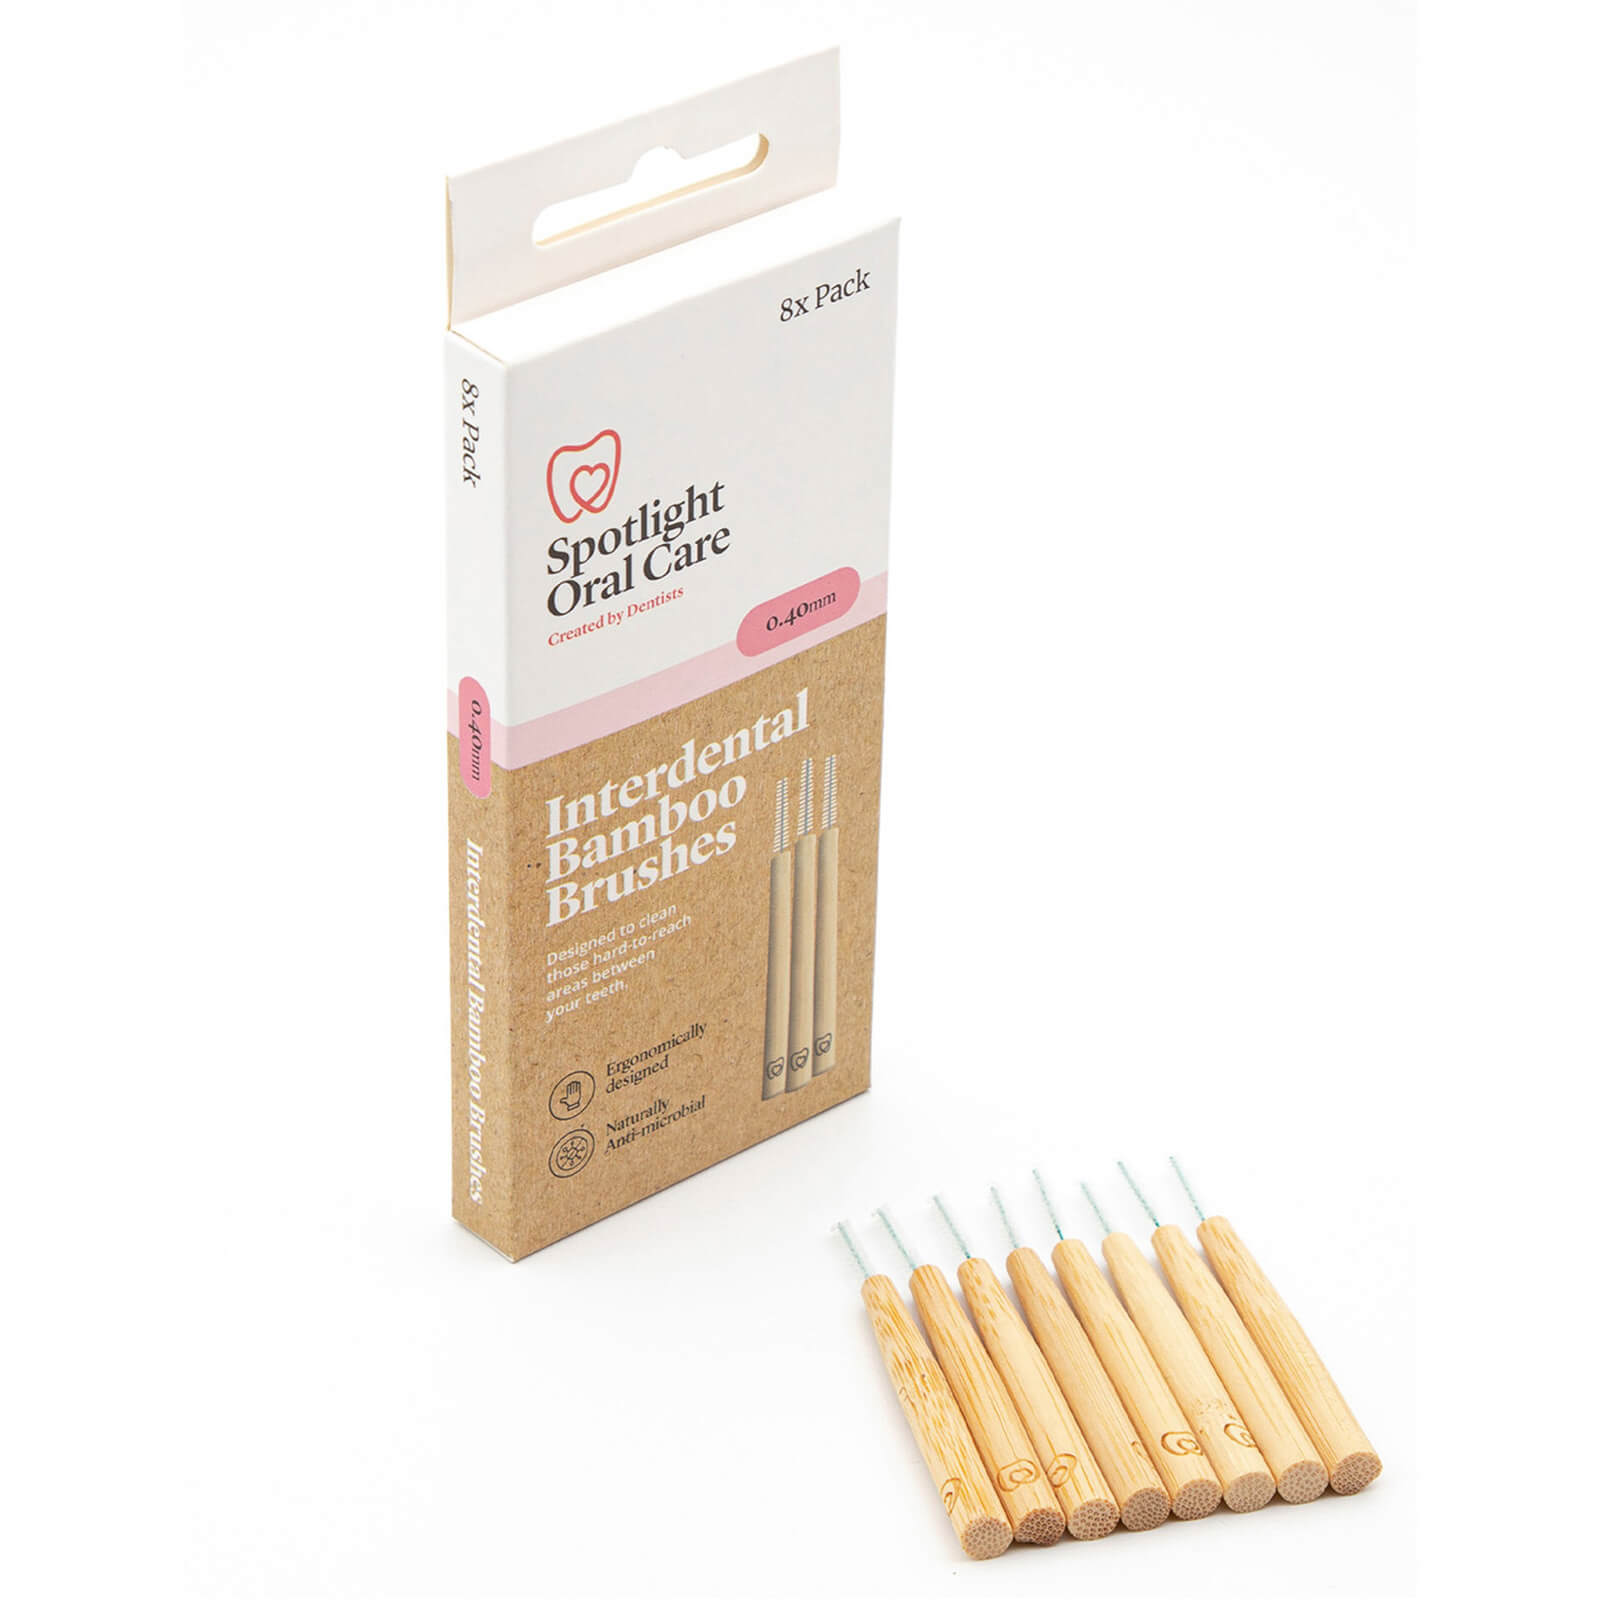 Spotlight Oral Care Interdental Bamboo Brushes - 0.4 Interdental Bamboo Brushes